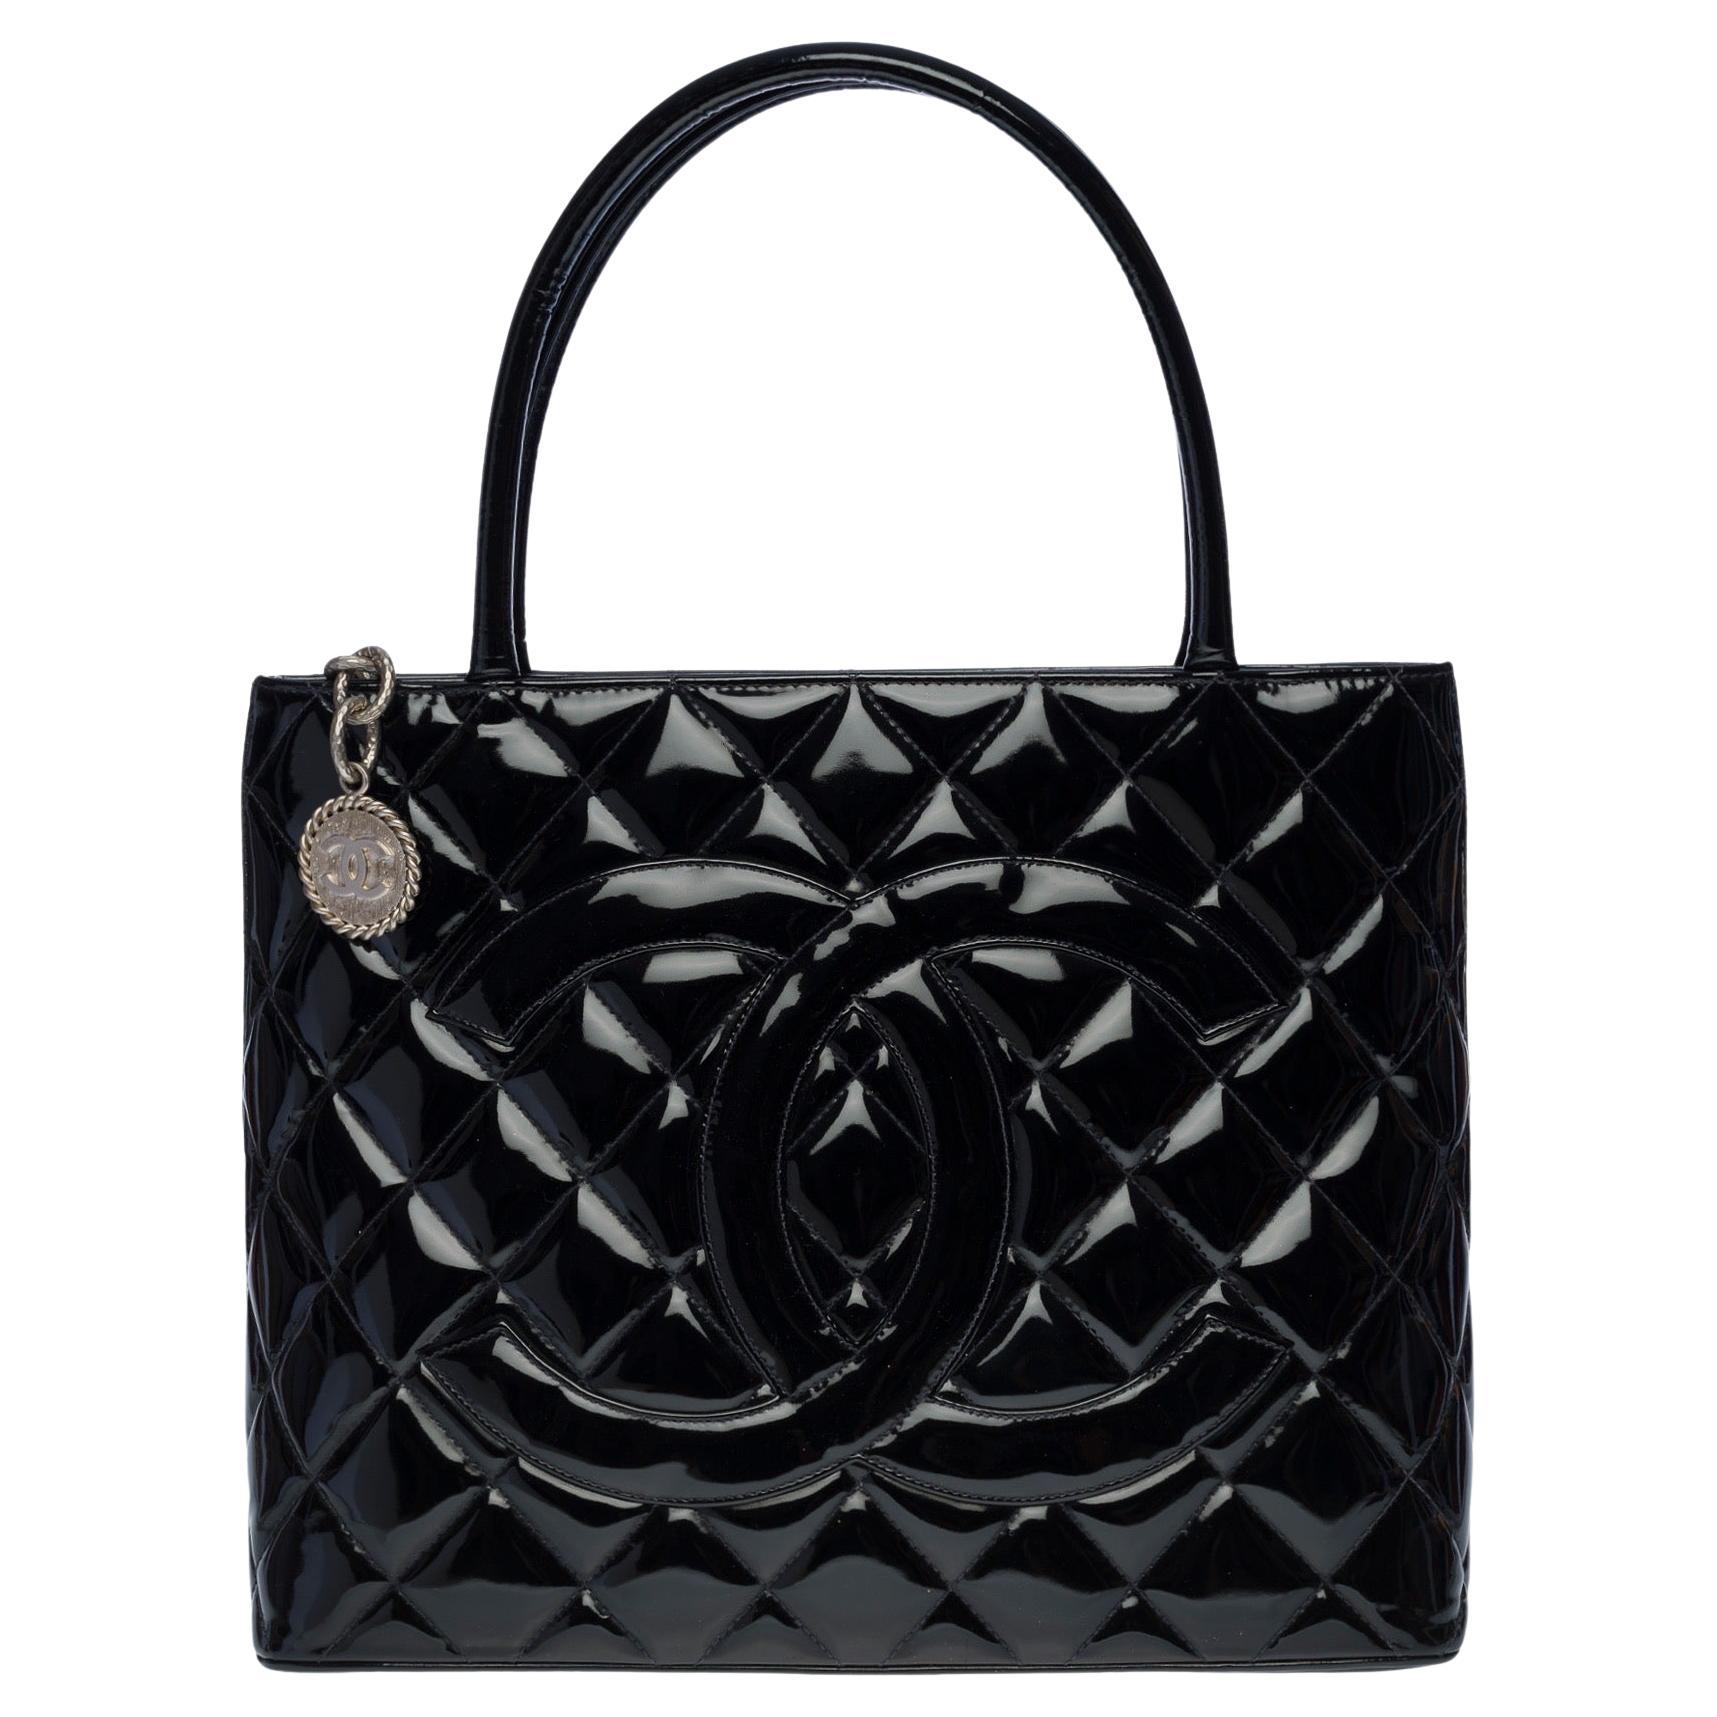 Magnifique sac Cabas Medallion de Chanel en cuir verni noir, SHW en vente